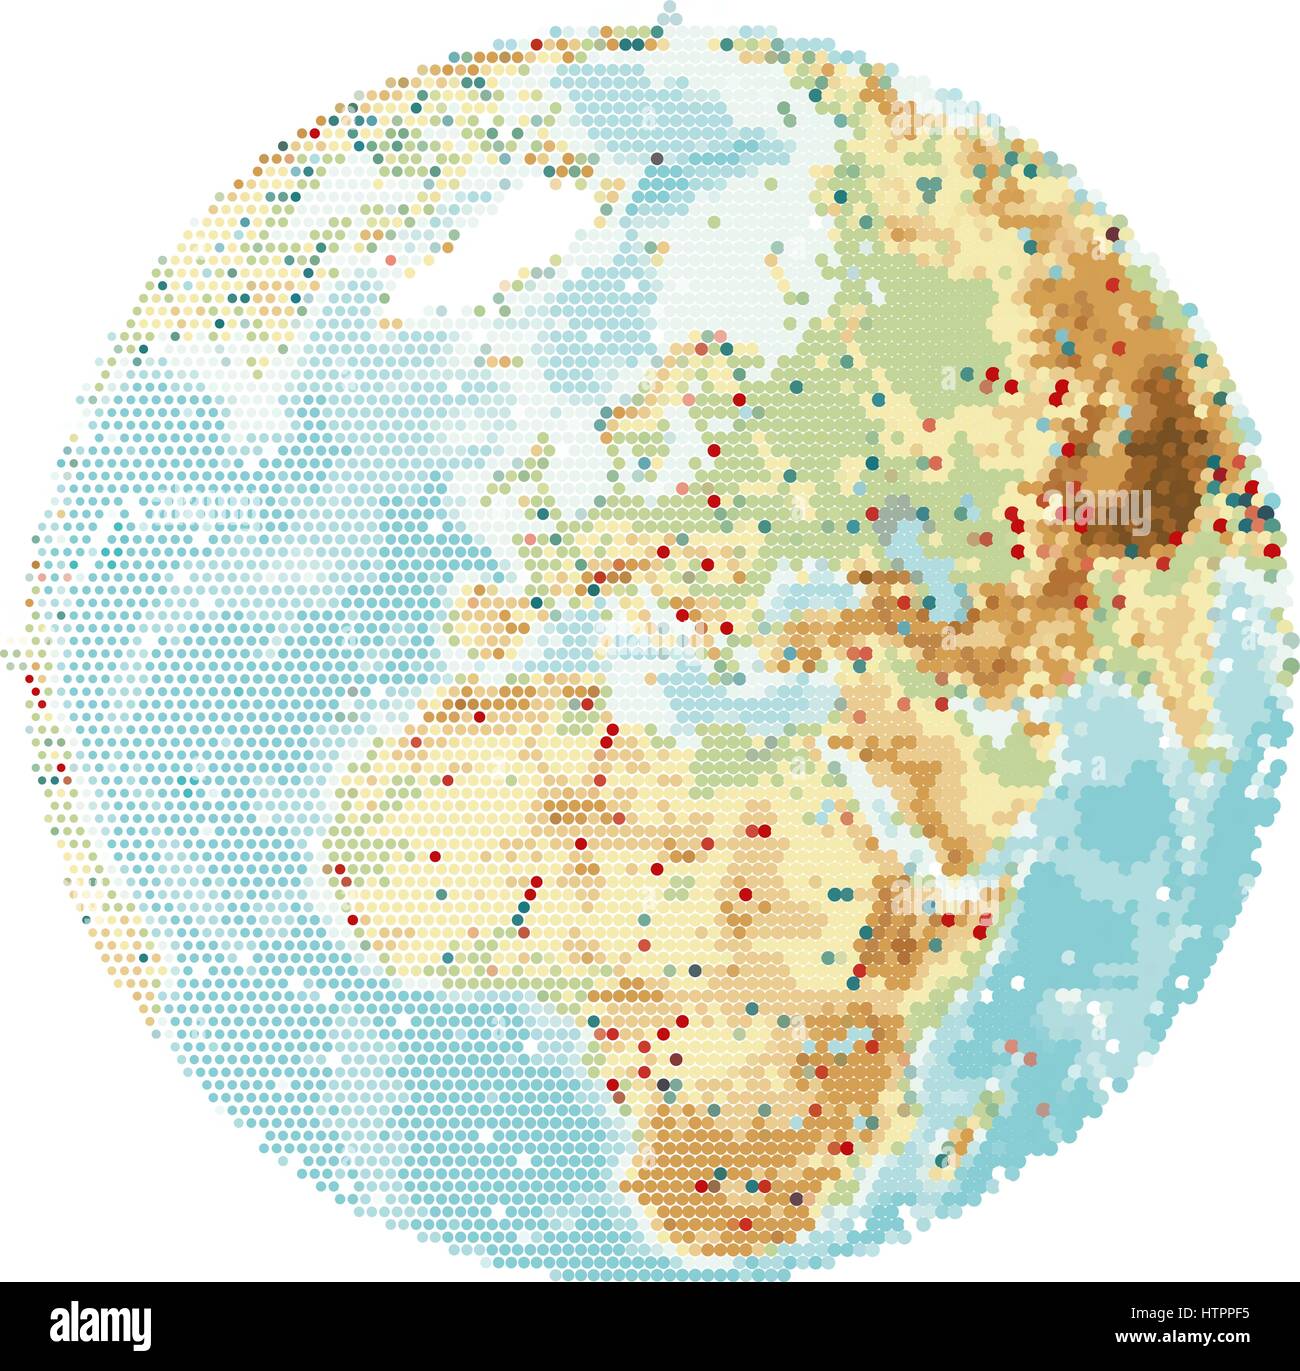 Karte von Europa und Afrika, Vektor-illustration Stock Vektor